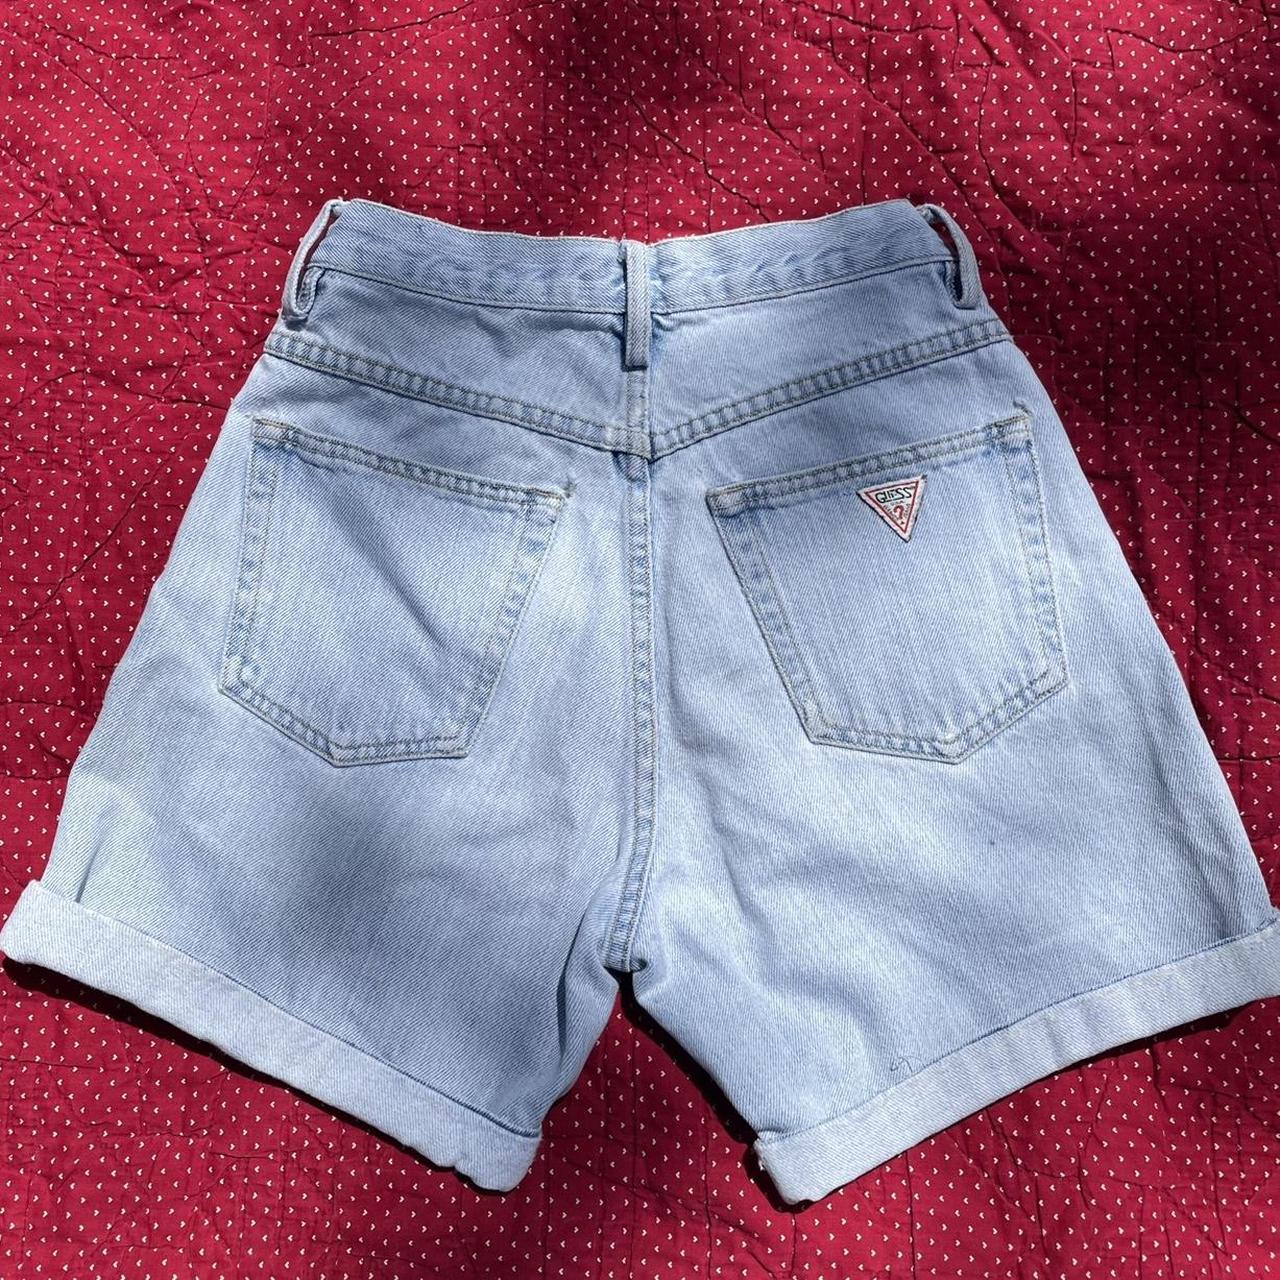 Guess Women's Bermuda Denim Shorts Blue Size 26